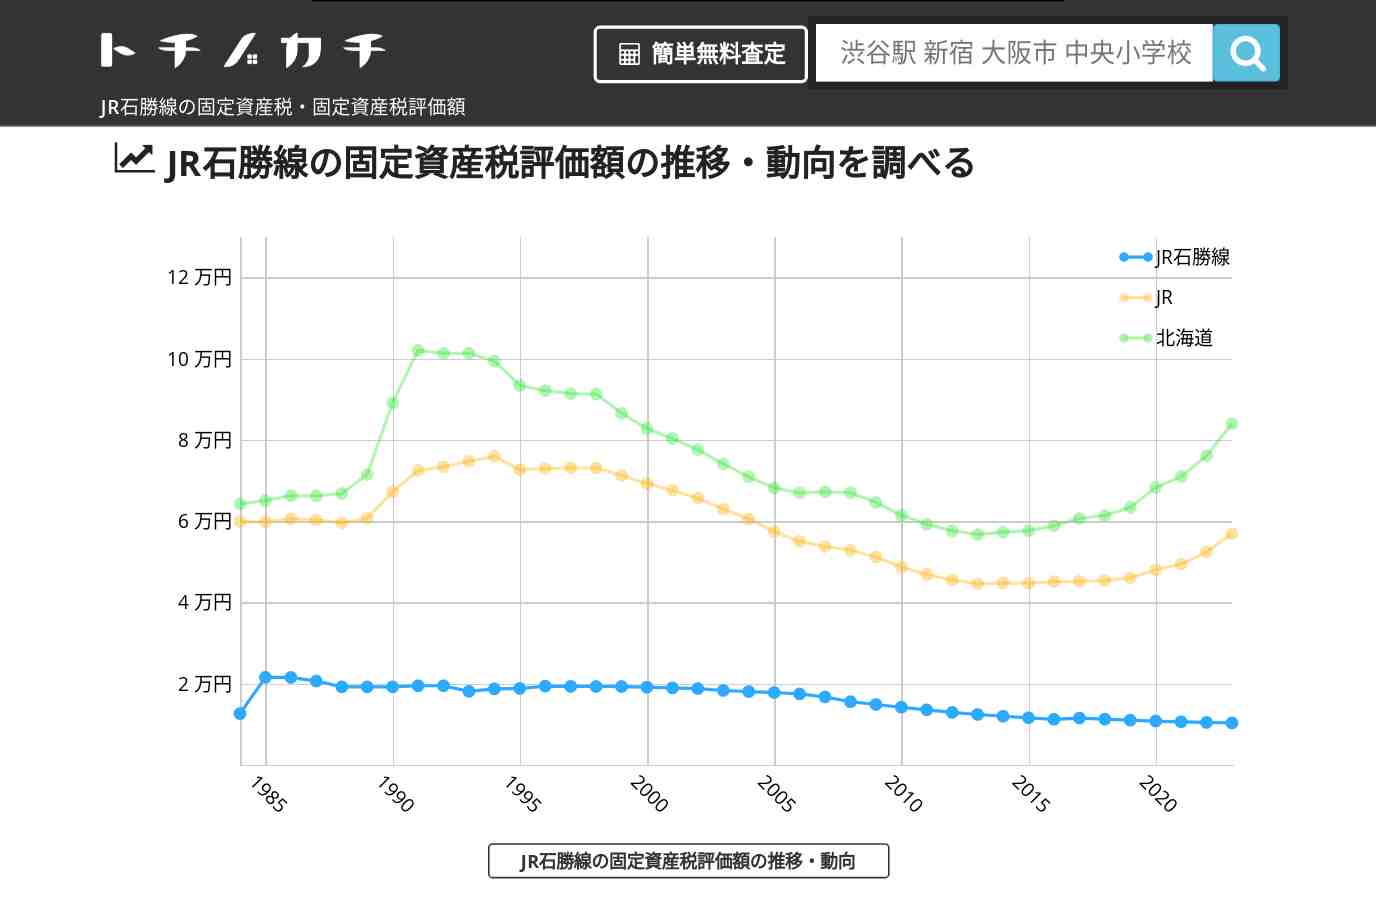 JR石勝線(JR)の固定資産税・固定資産税評価額 | トチノカチ